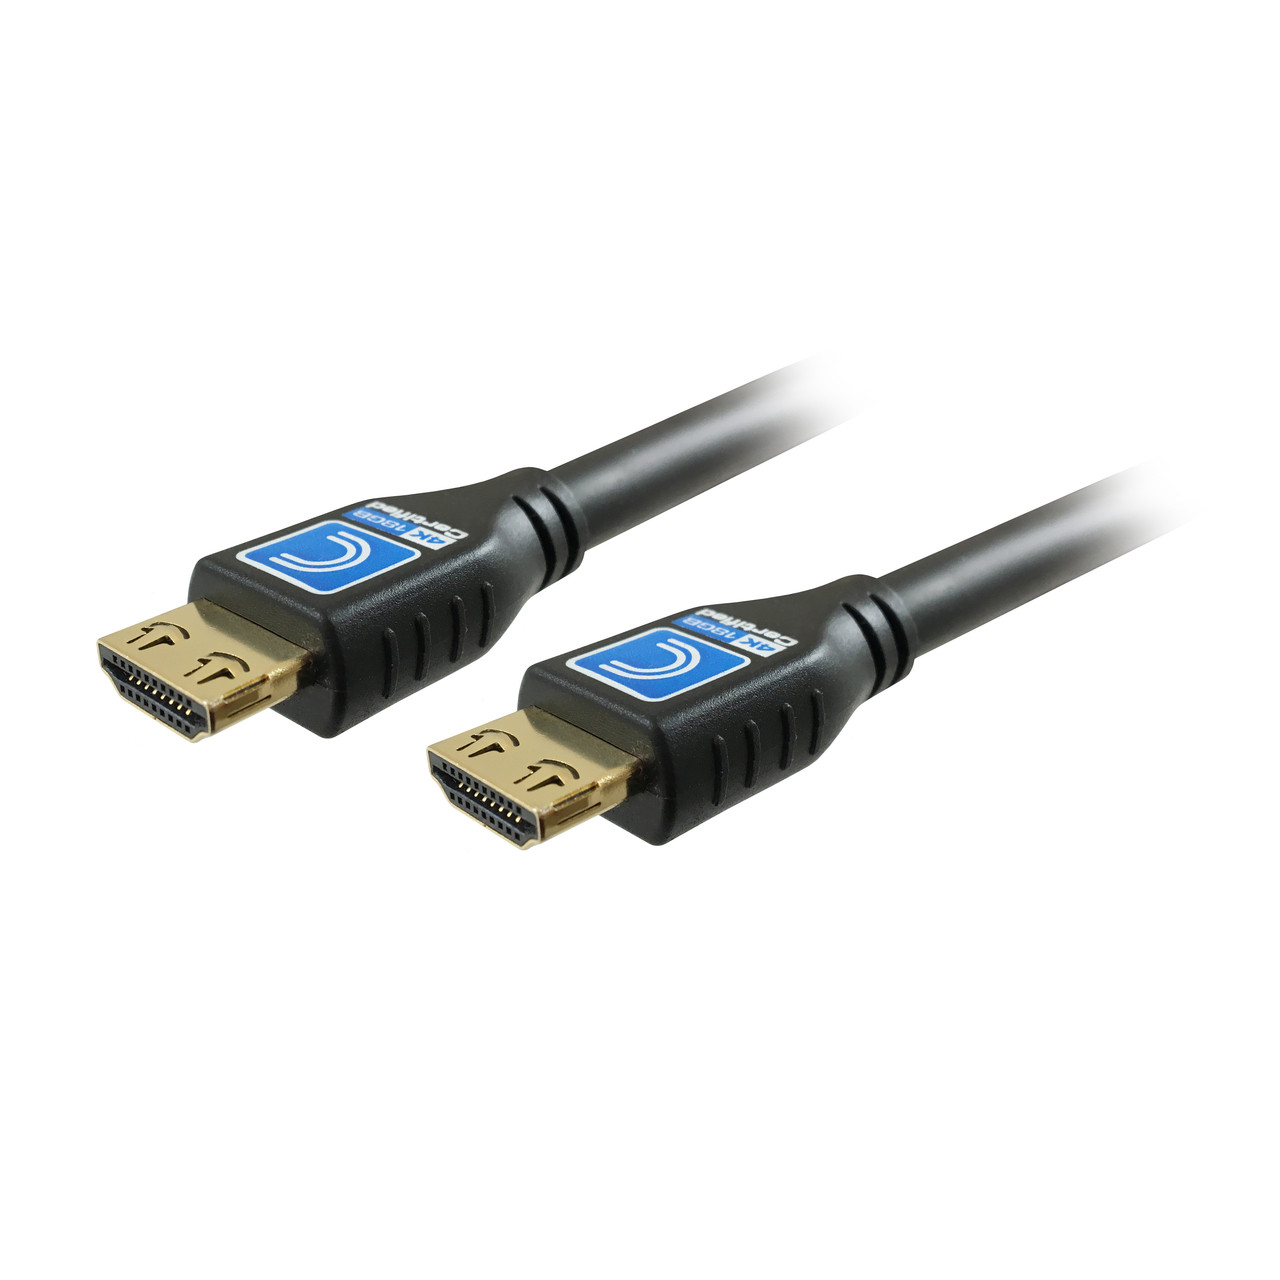 Cable HDMI Negro Belden con. B: HDMI Macho, long. 3m